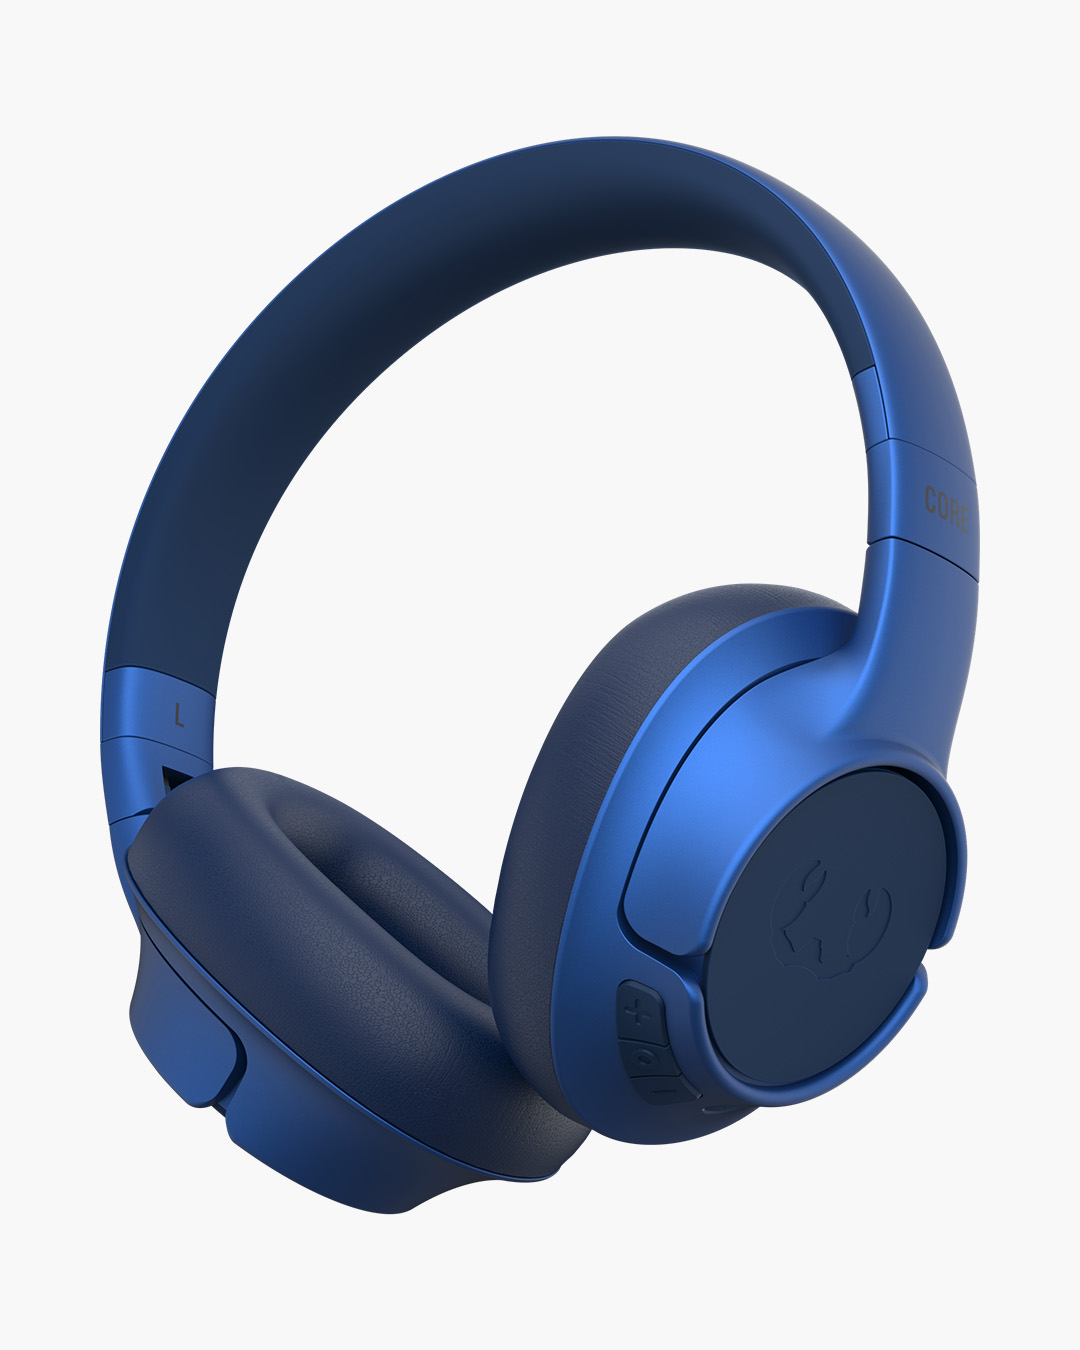 Fresh 'n Rebel Clam Core over-ear headphones